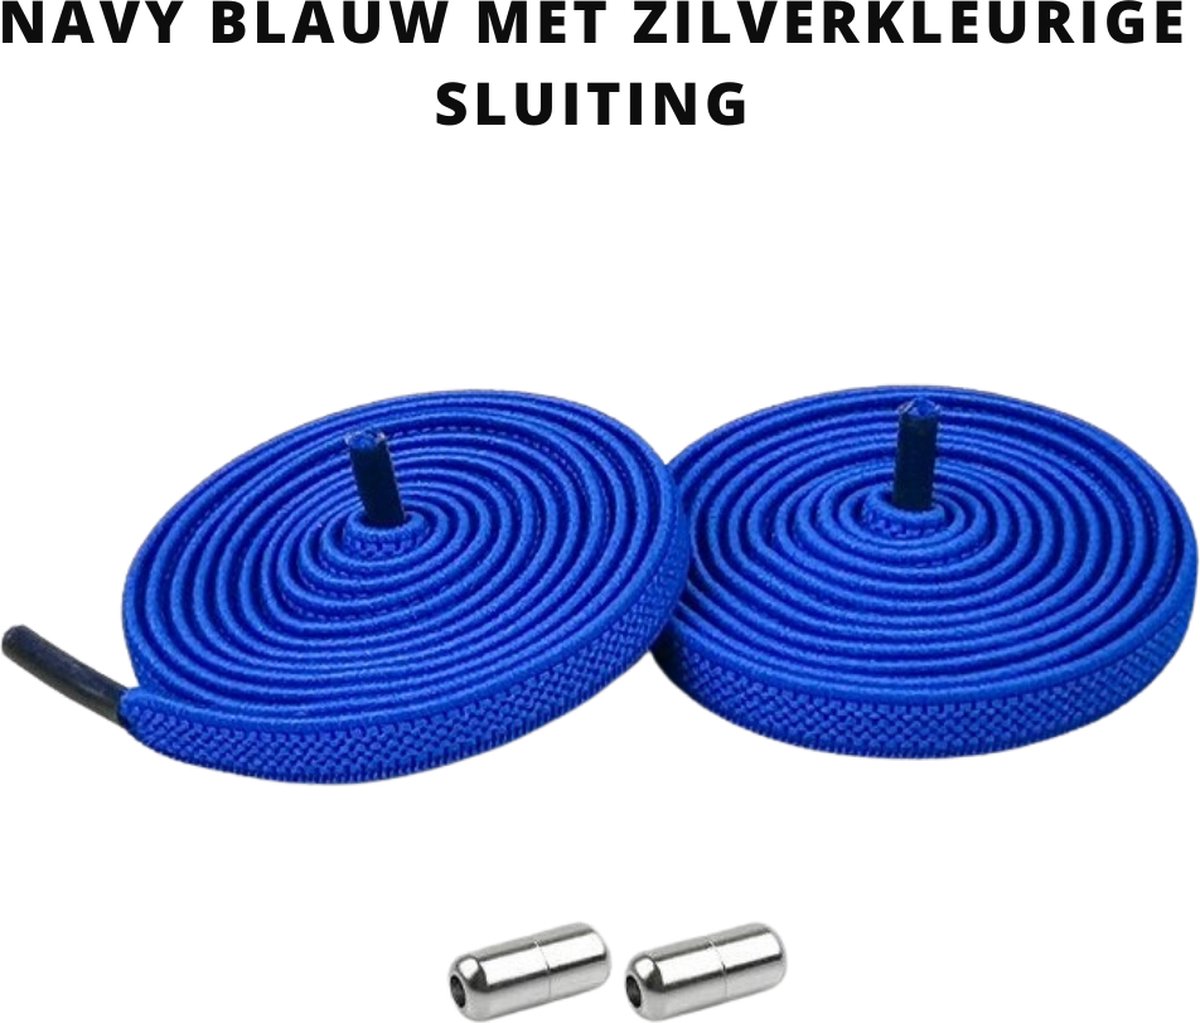 Beste Veters - Veters elastische - Veters draaisluiting - Blauwe veters - Lock laces - Veters 100 cm - Veters blauw